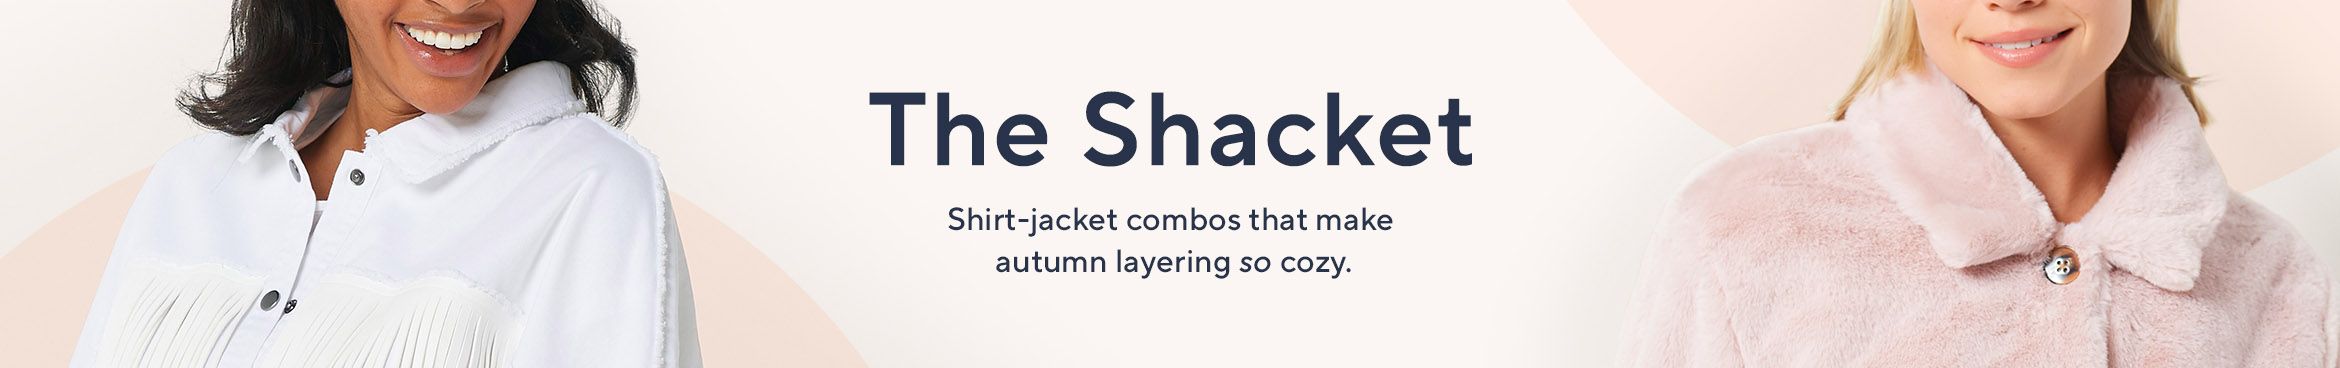 The Shacket. Shirt-jacket combos that make autumn layering so cozy.